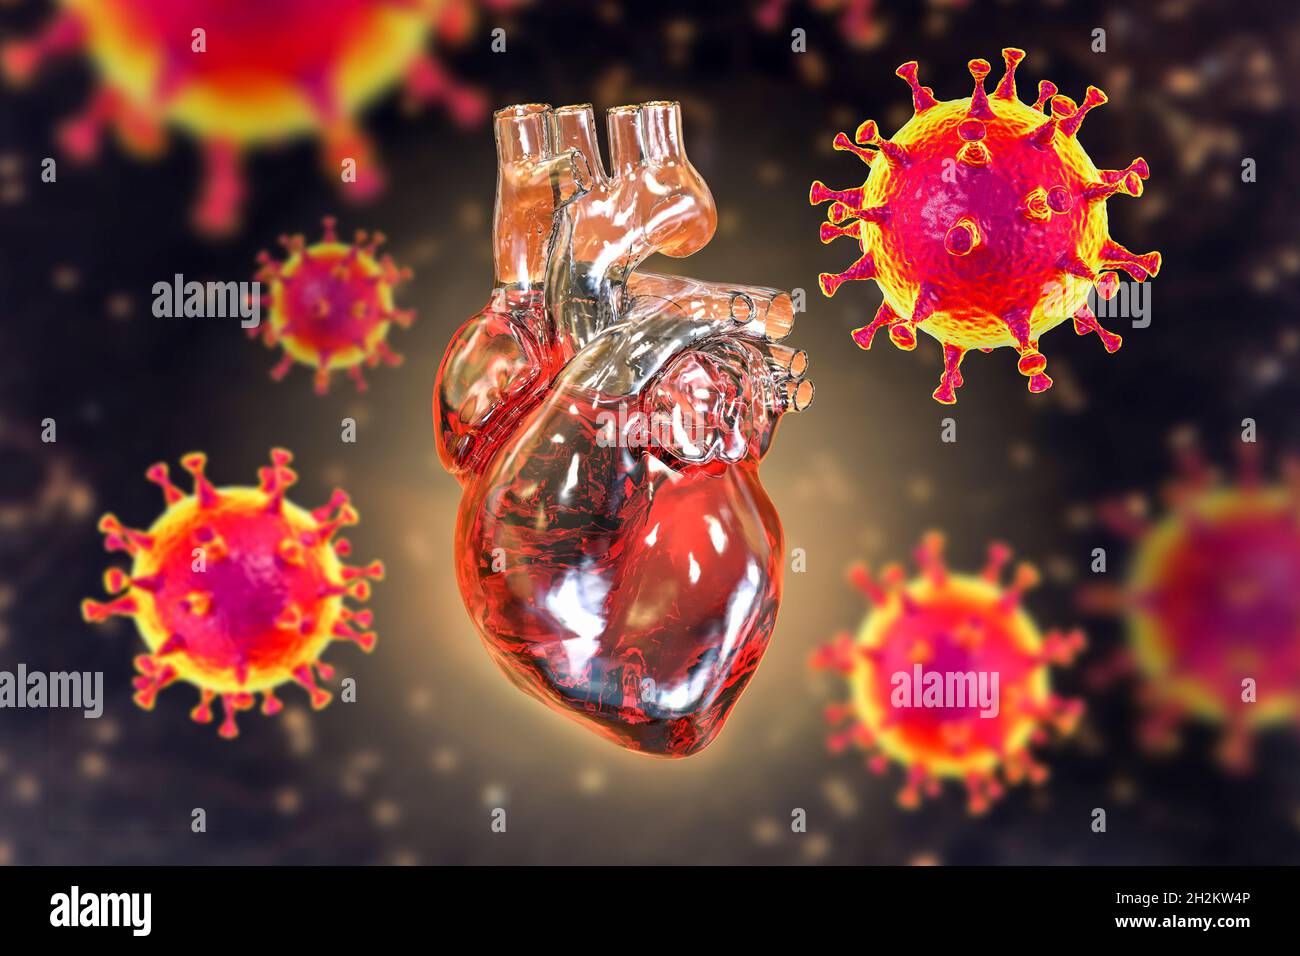 Covid-19 viruses affecting the heart, illustration Stock Photo